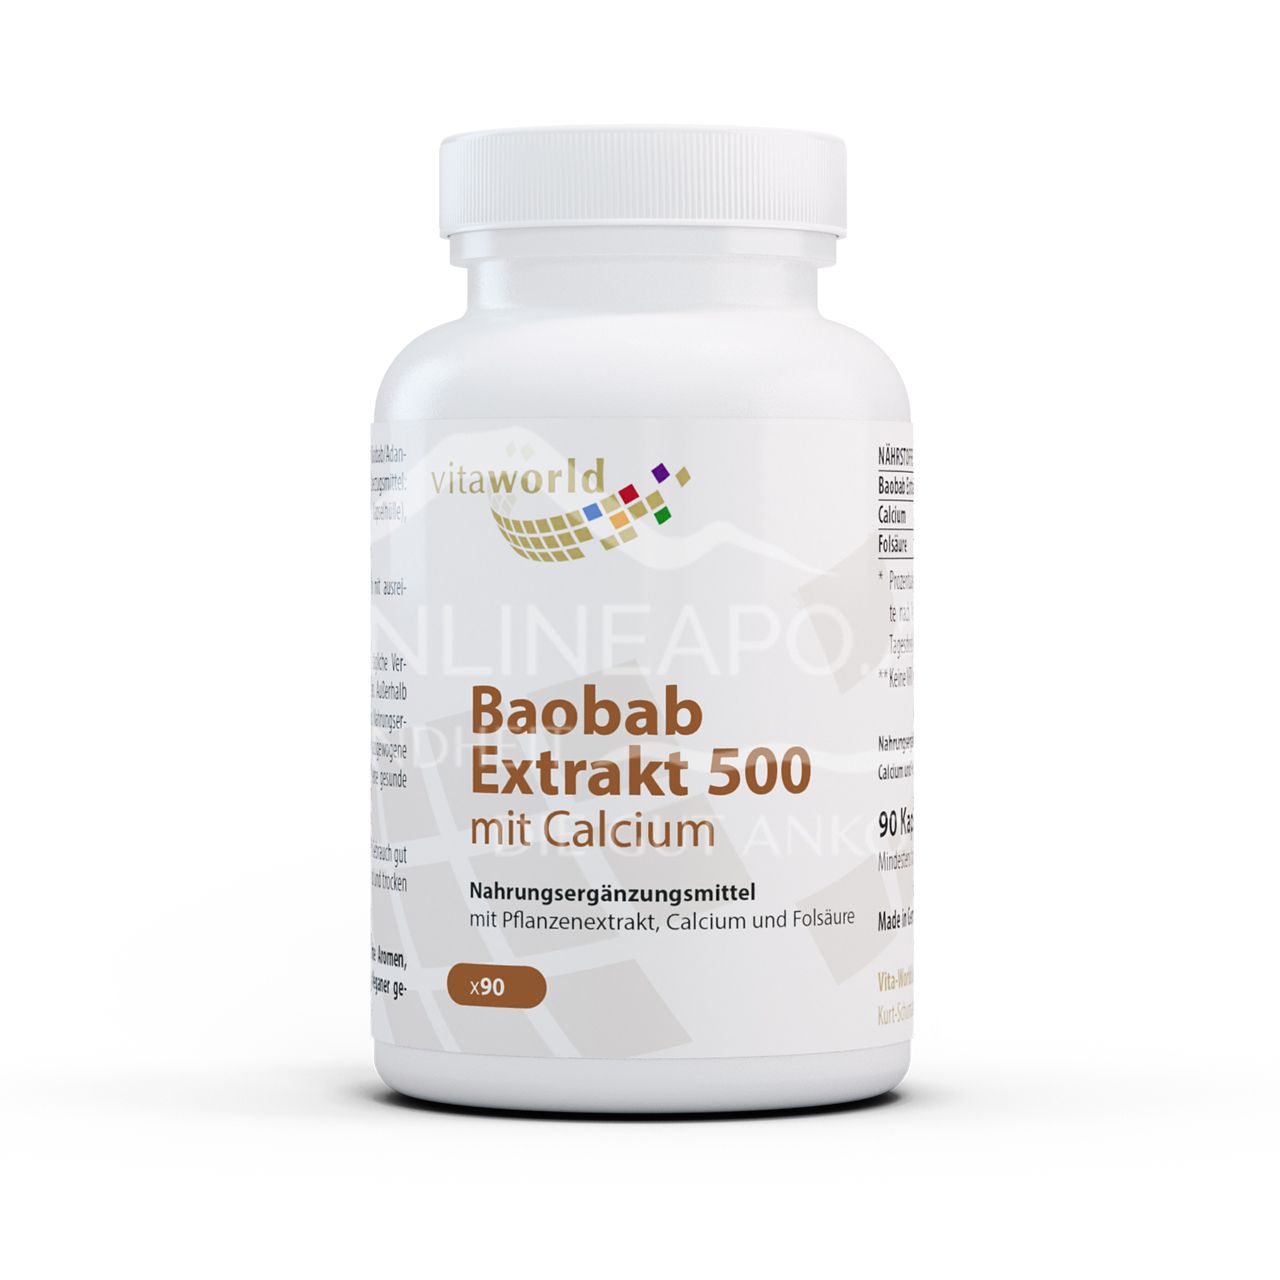 Vitaworld Baobab Extrakt 500 mit Calcium Kapseln